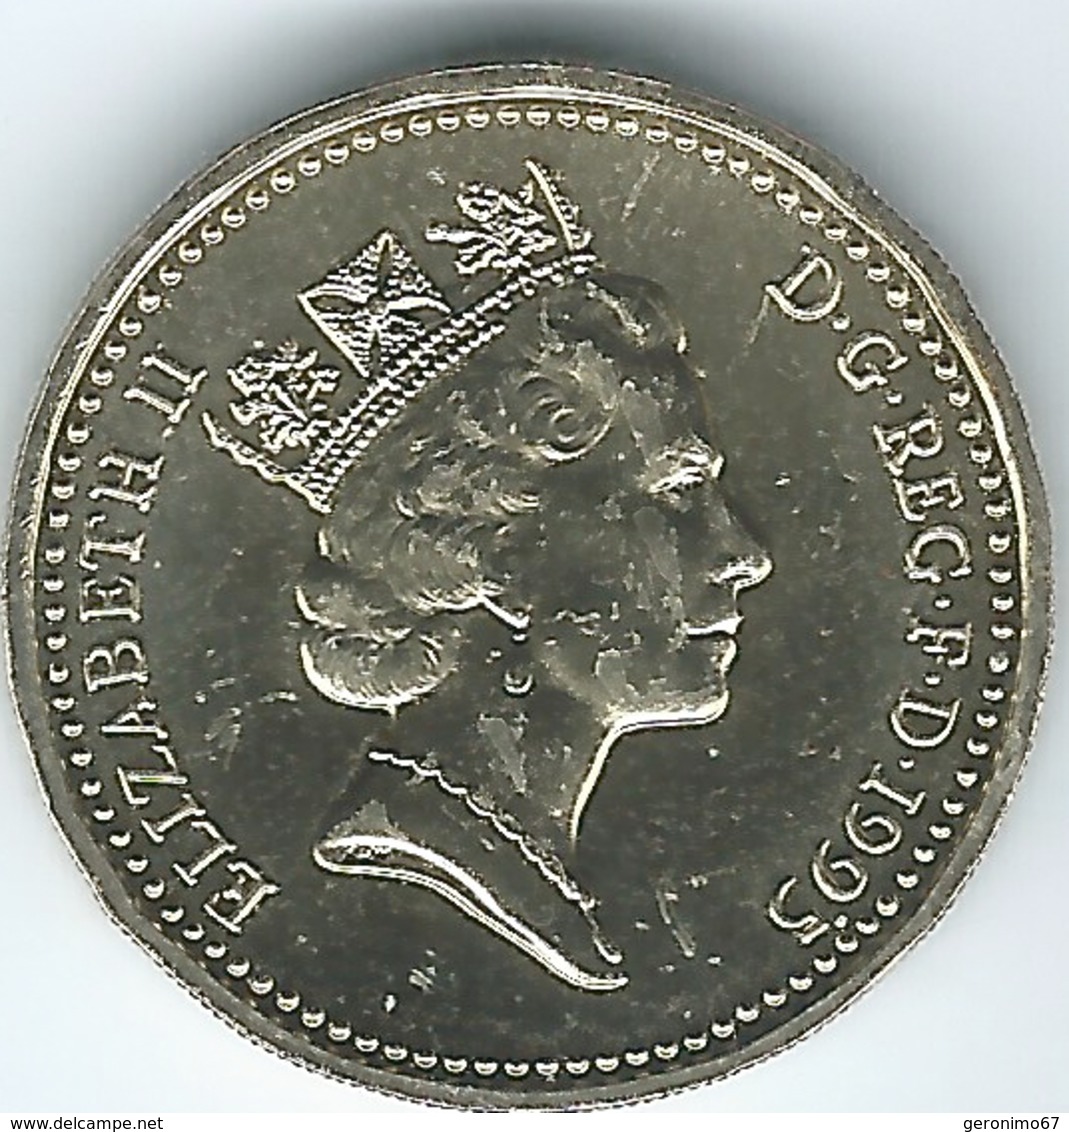 Great Britain / United Kingdom - 1995 - 1 Pound - Elizabeth II - Welsh Dragon - KM969 - 1 Pound